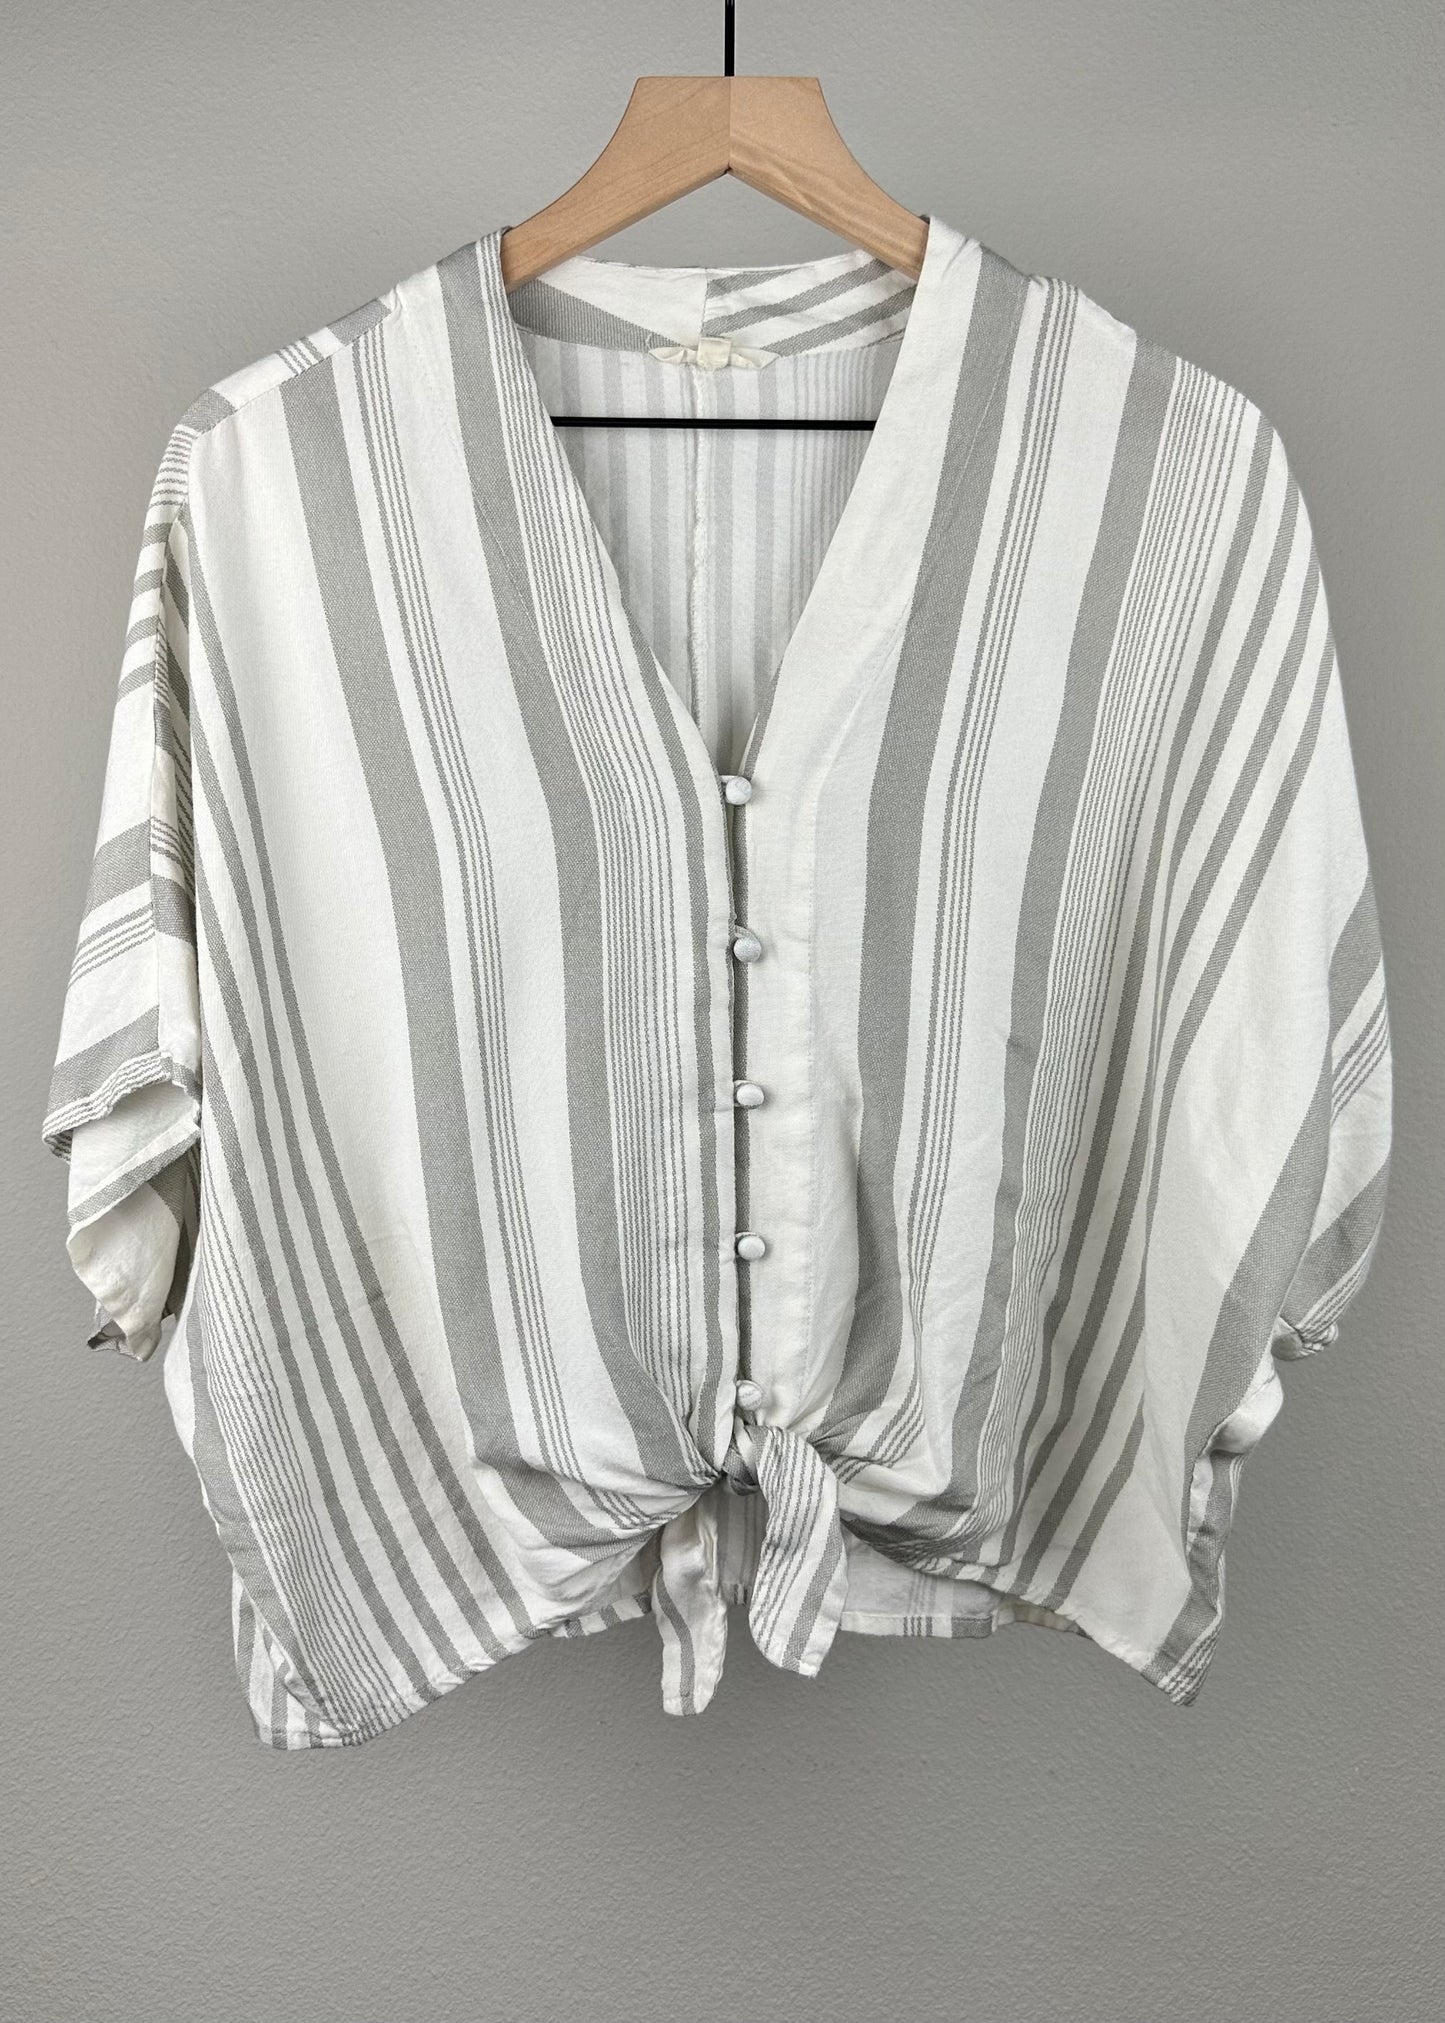 Women’s White and Tan Striped Boxy Shirt by Sim & Sam